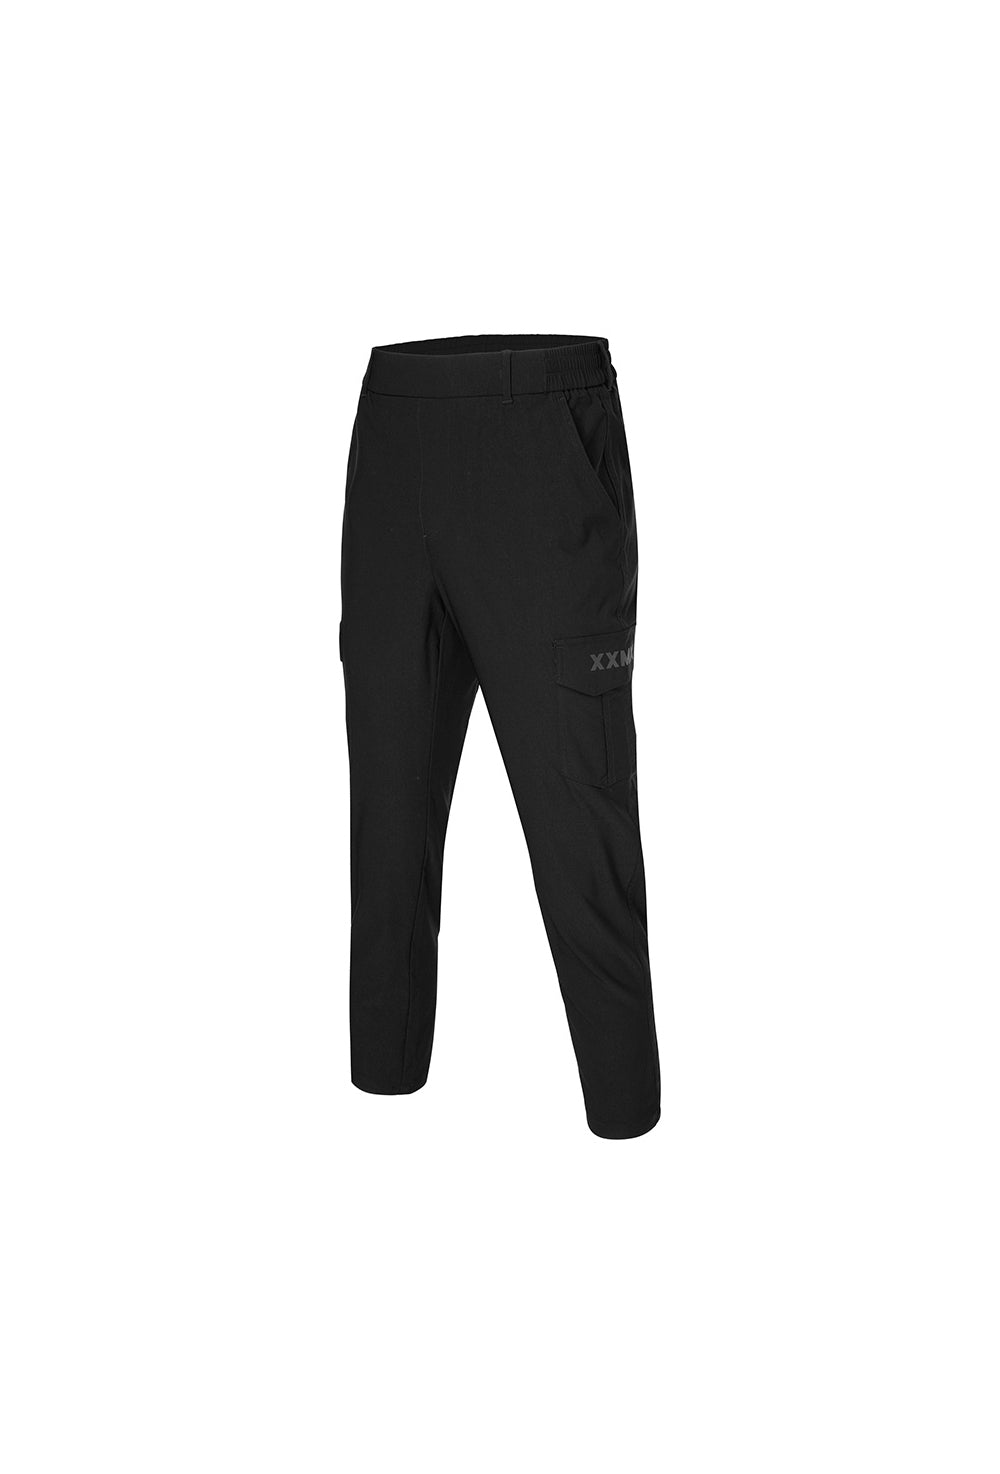 Stretch Out Pocket Pants - Black